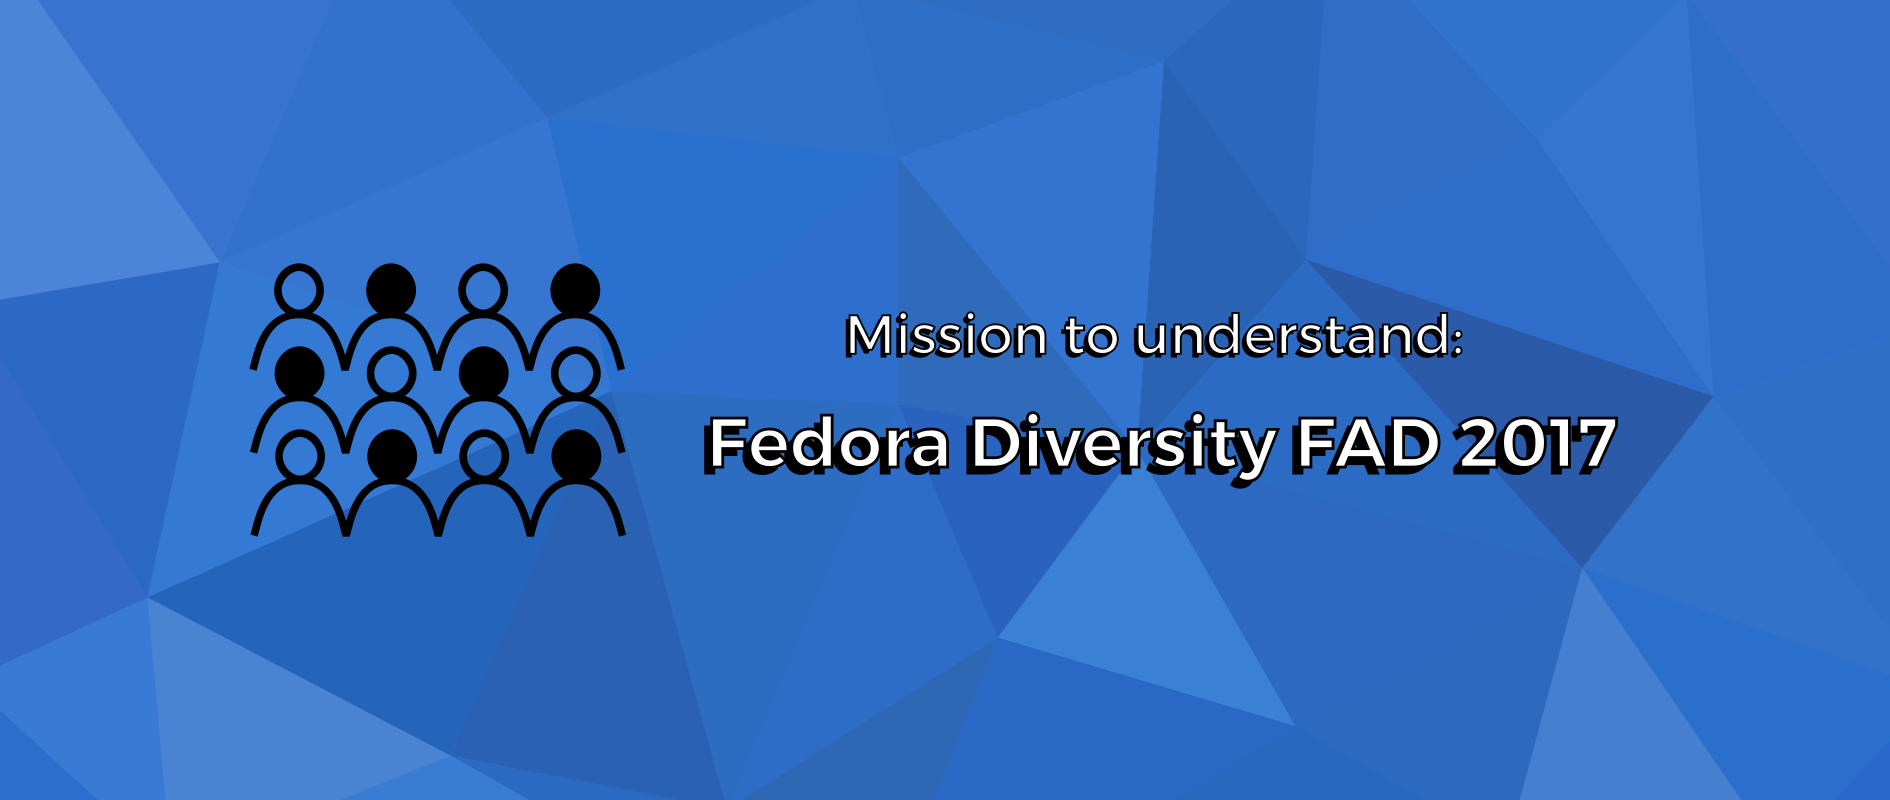 Mission to understand: Fedora Diversity FAD 2017